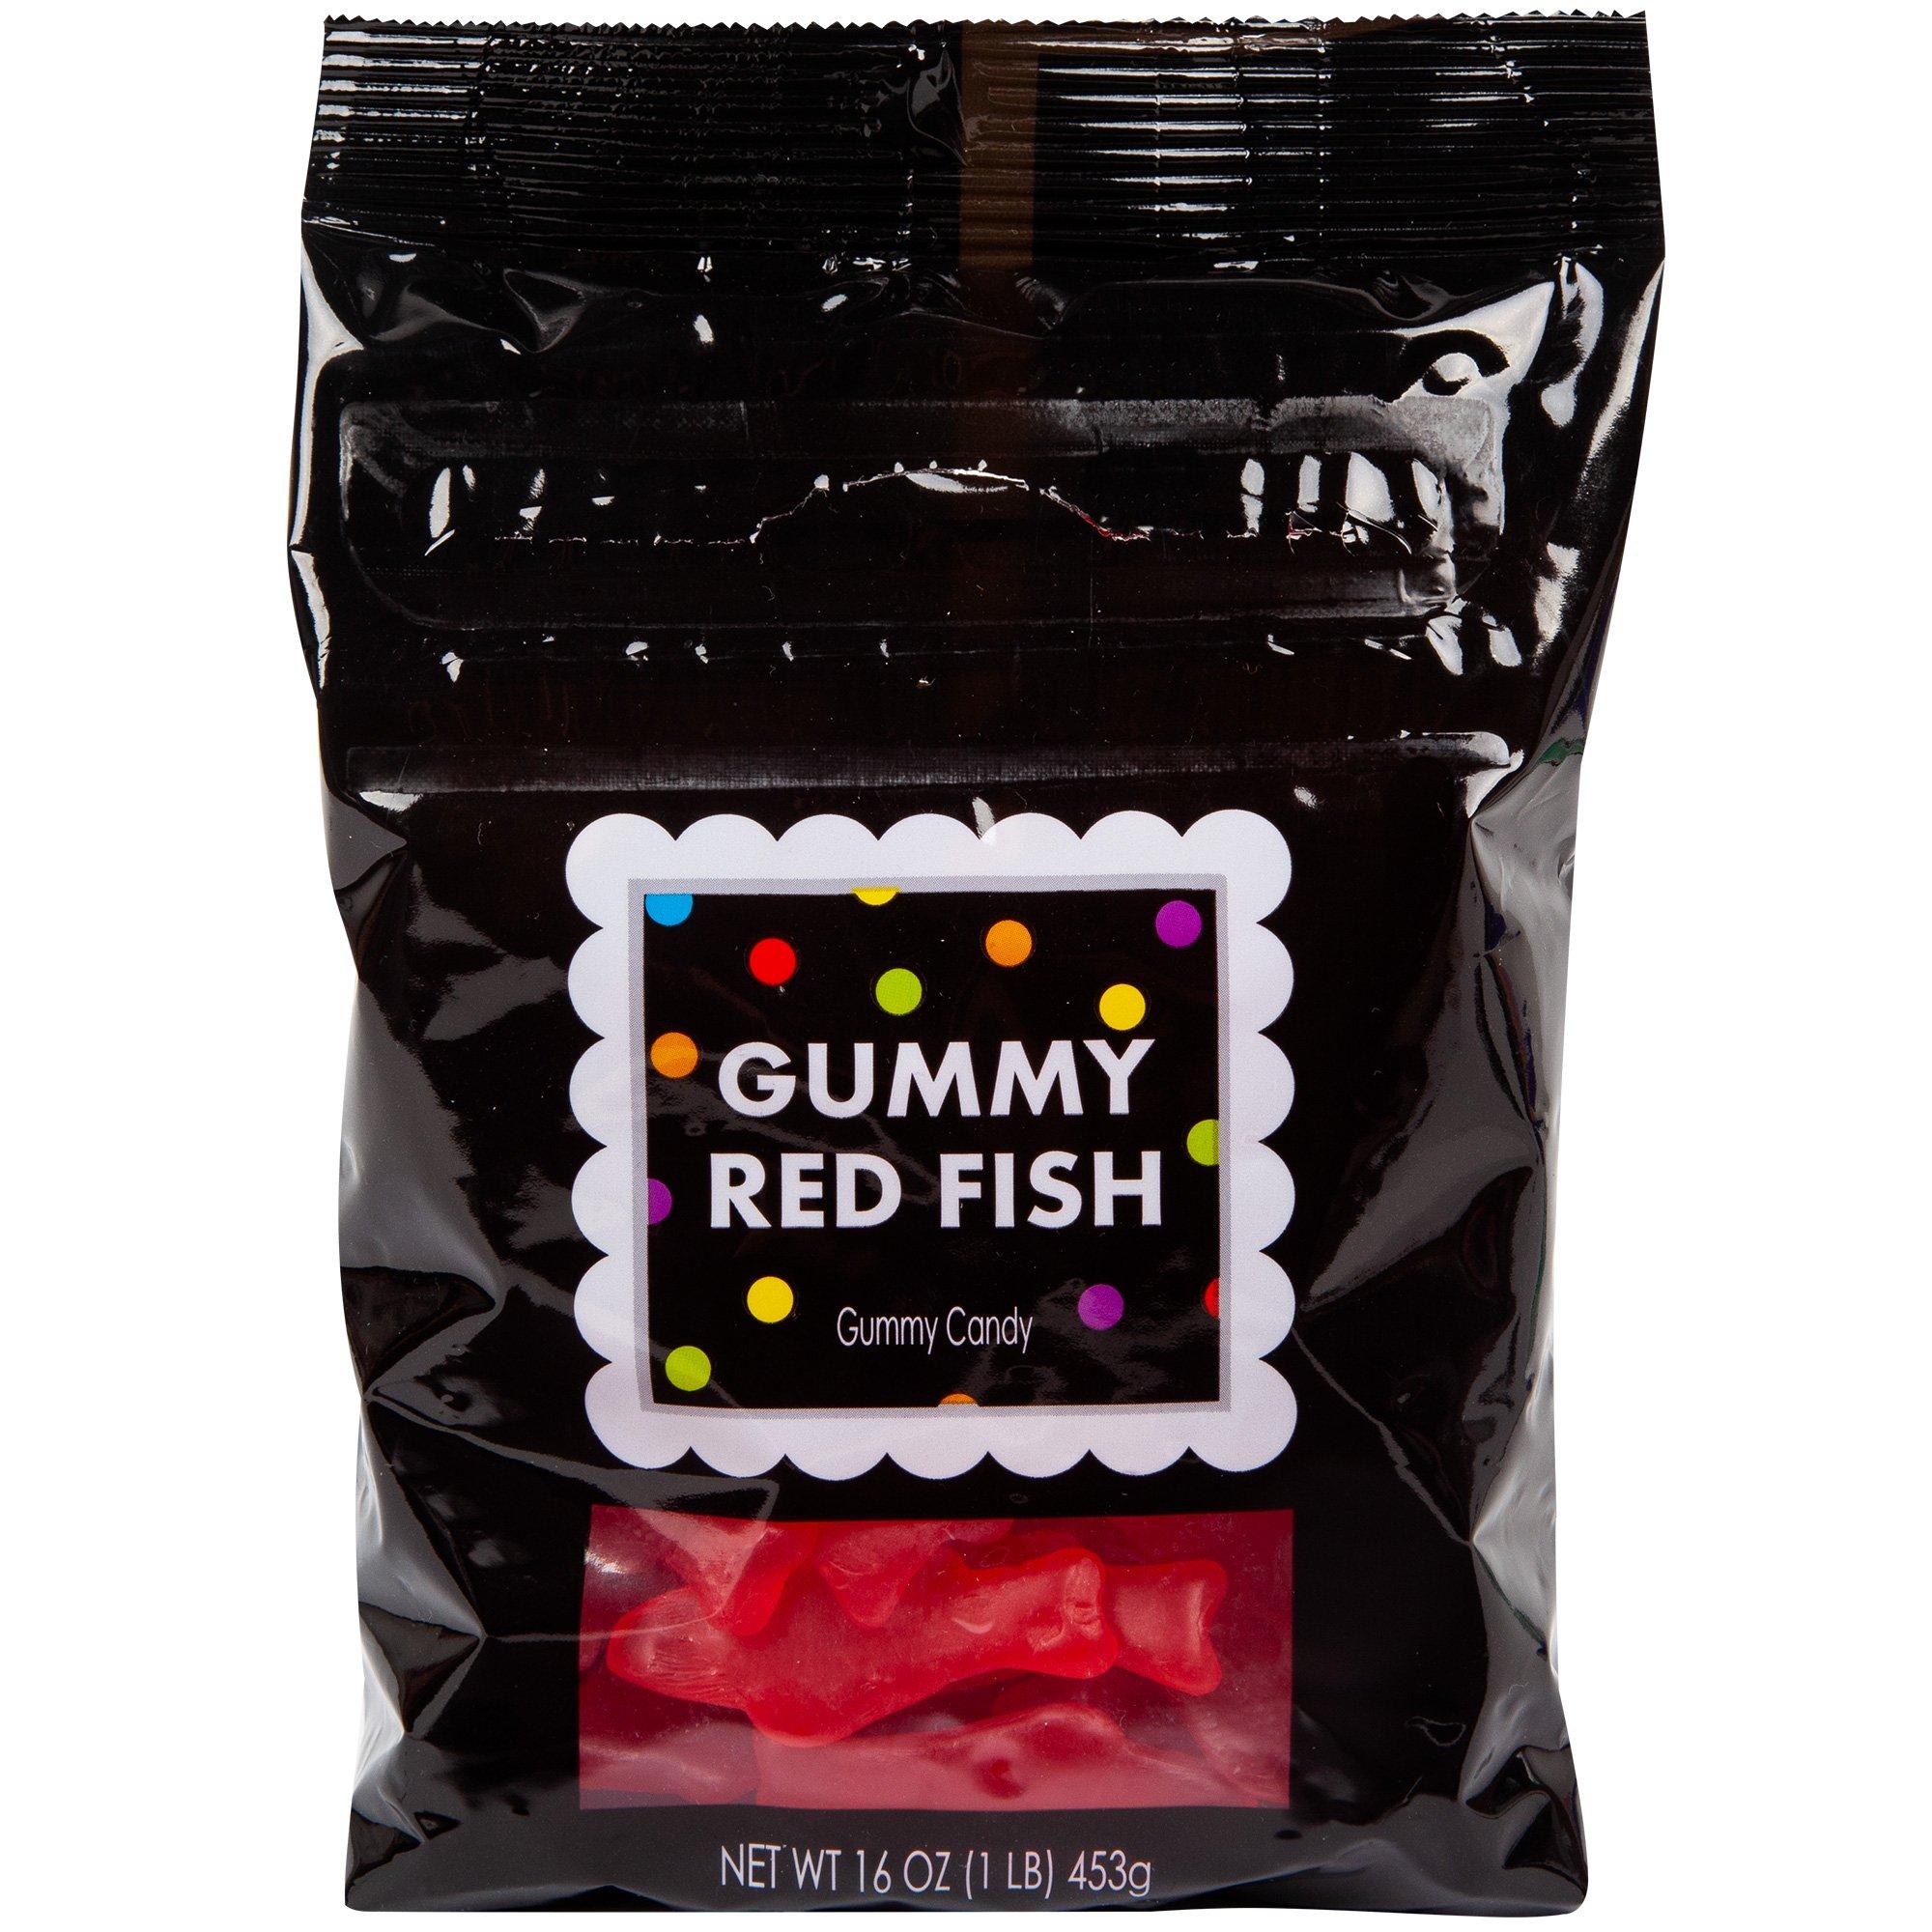 Gummy Red Fish, 16oz - Raspberry Flavor